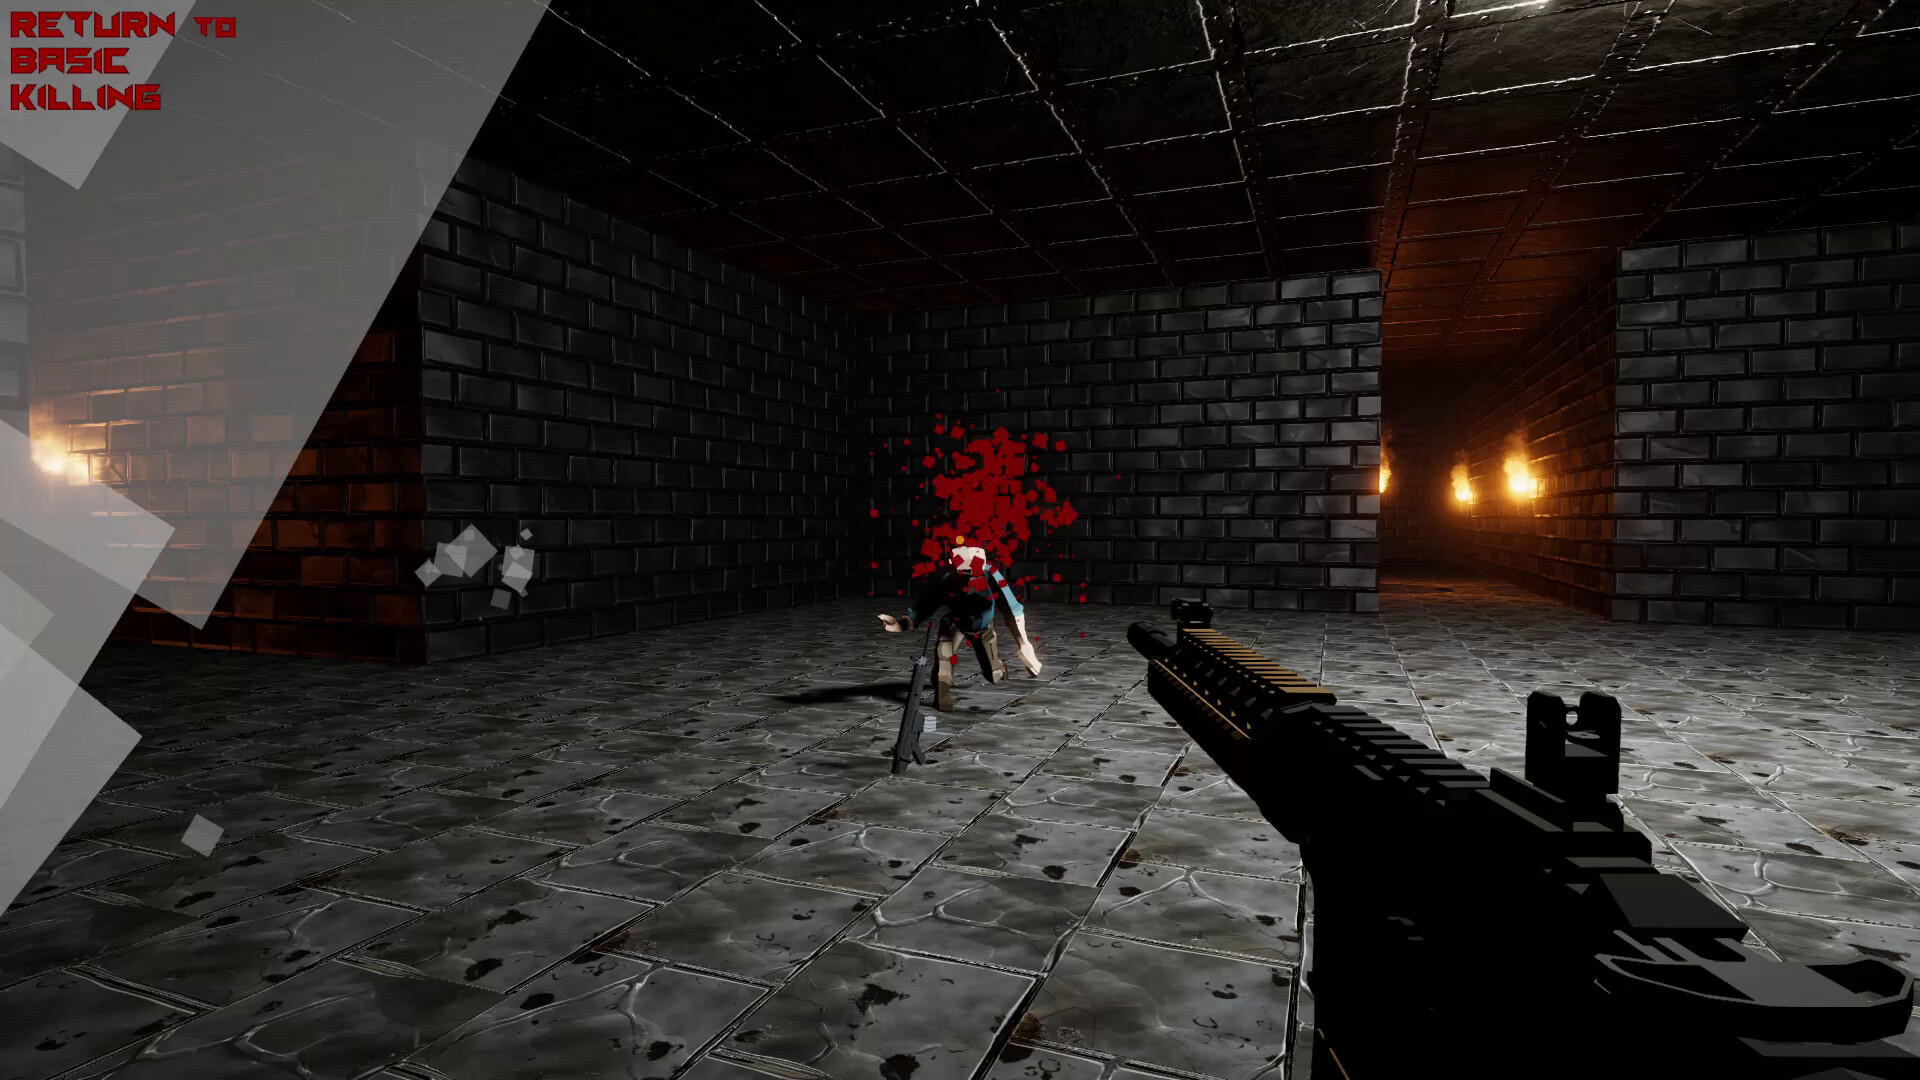 Screenshot of Return to Basic Killing